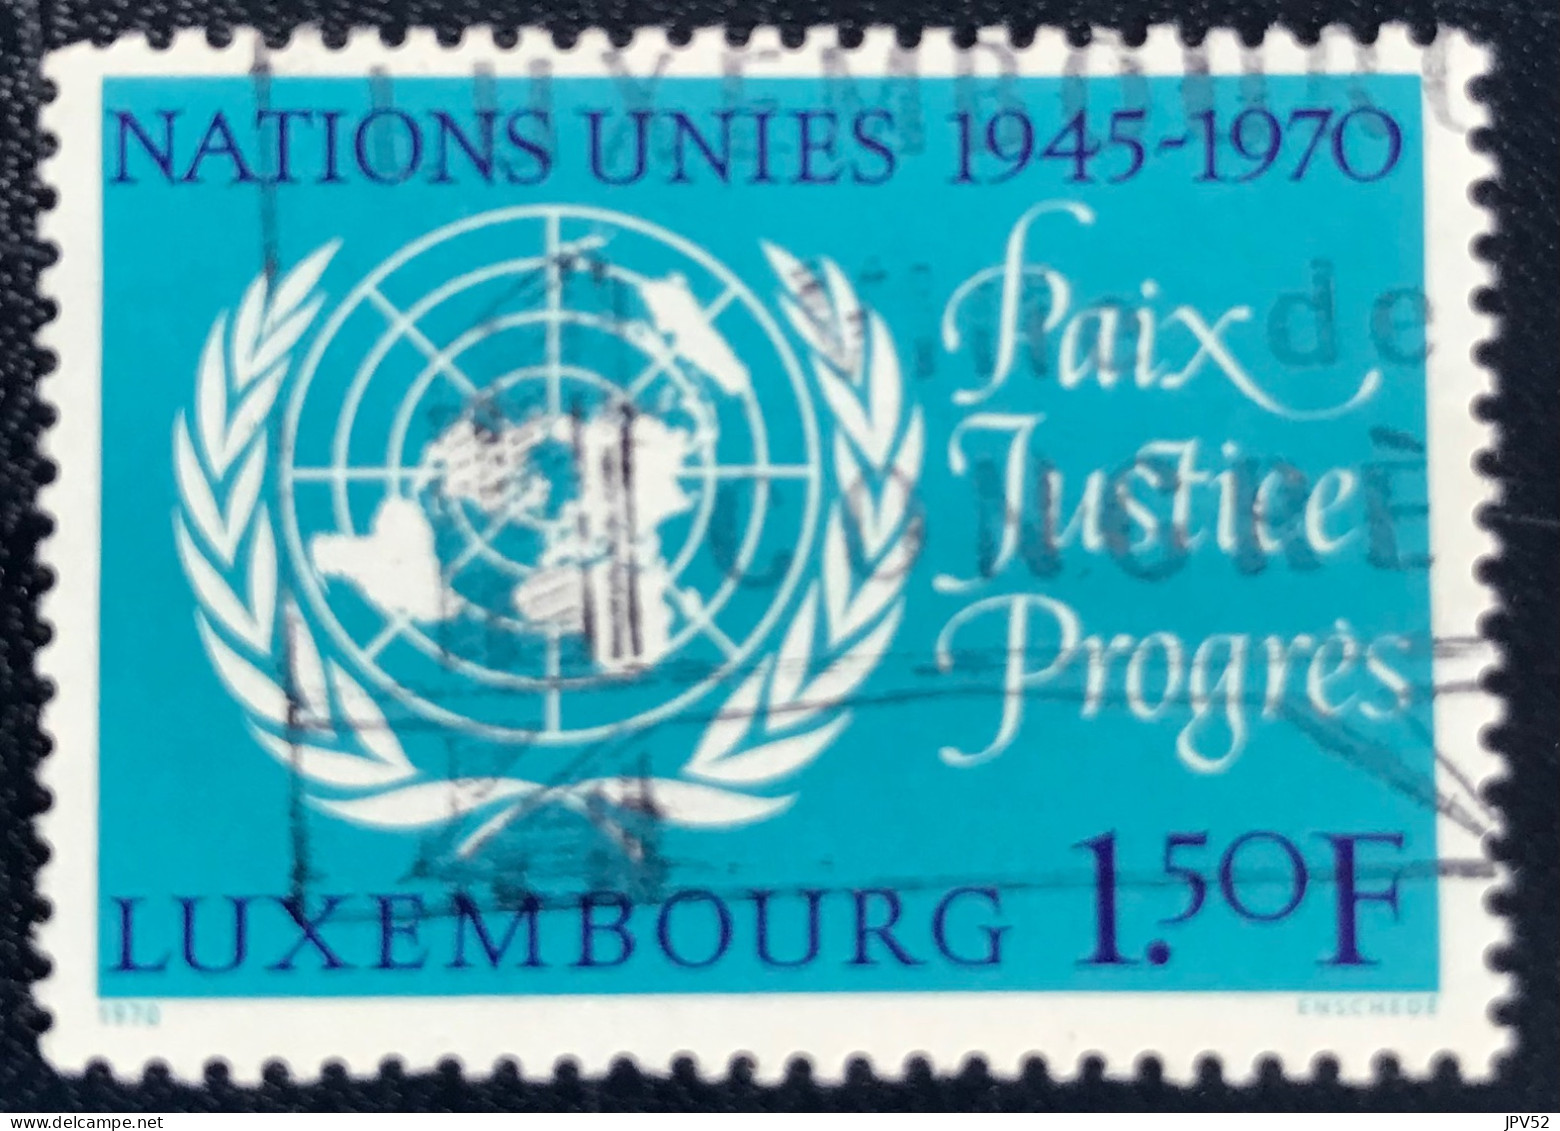 Luxembourg - Luxemburg - C18/32 - 1970 - (°)used - Michel 813 - Embleem VN - Usati